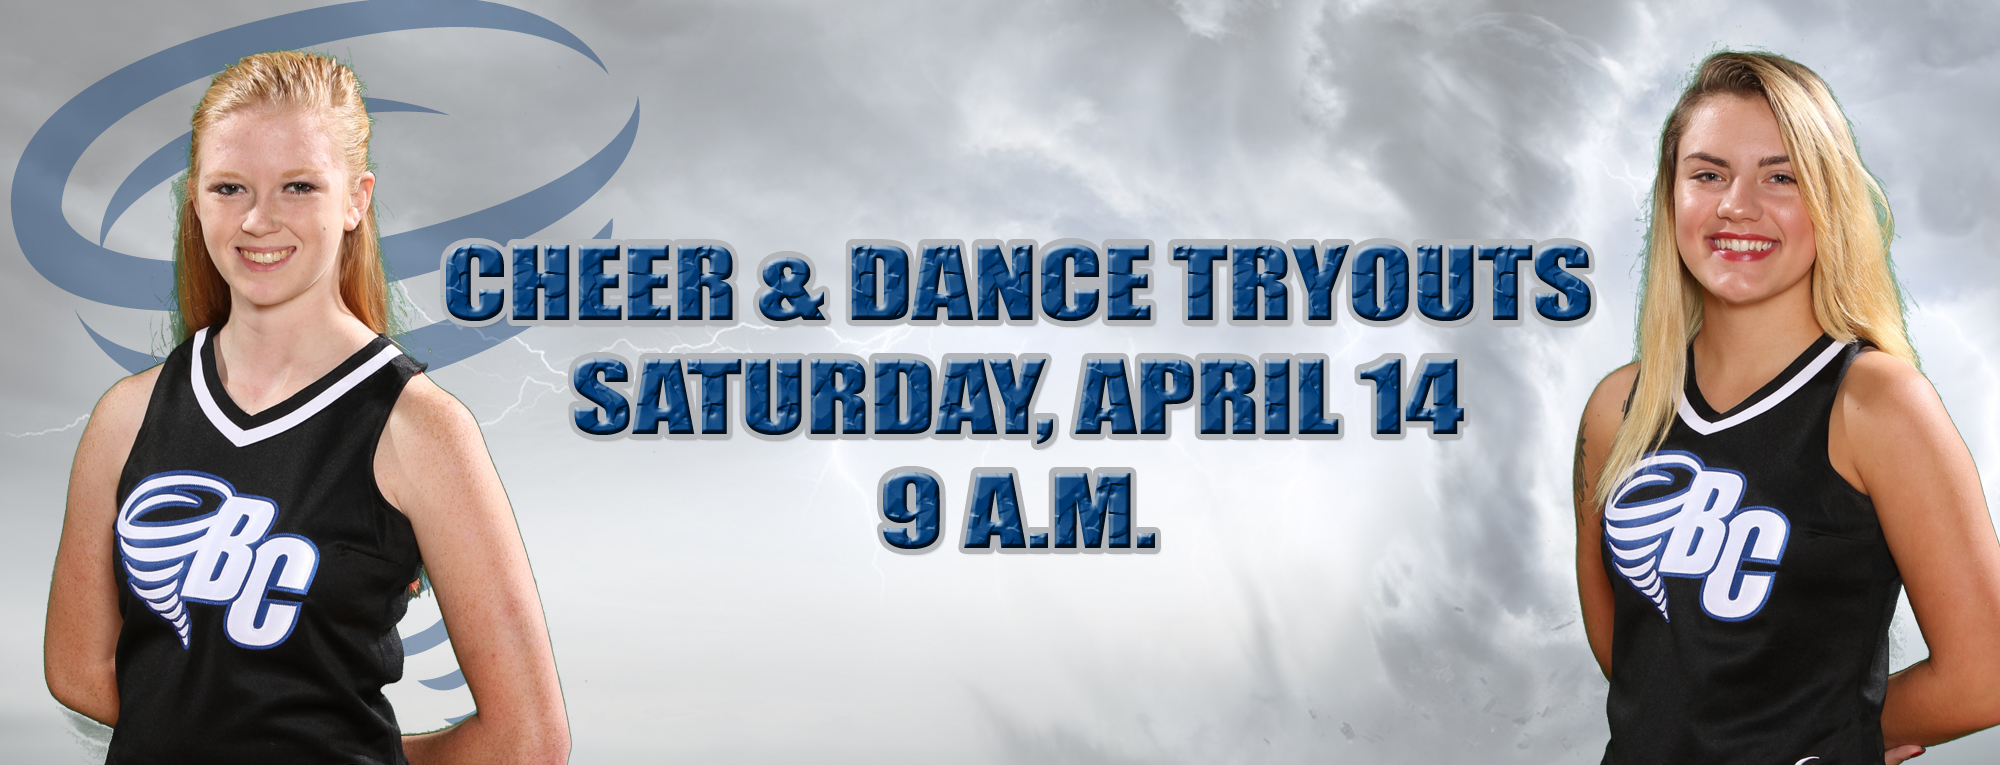 Tornados’ Cheer & Dance Team Hosting Tryouts